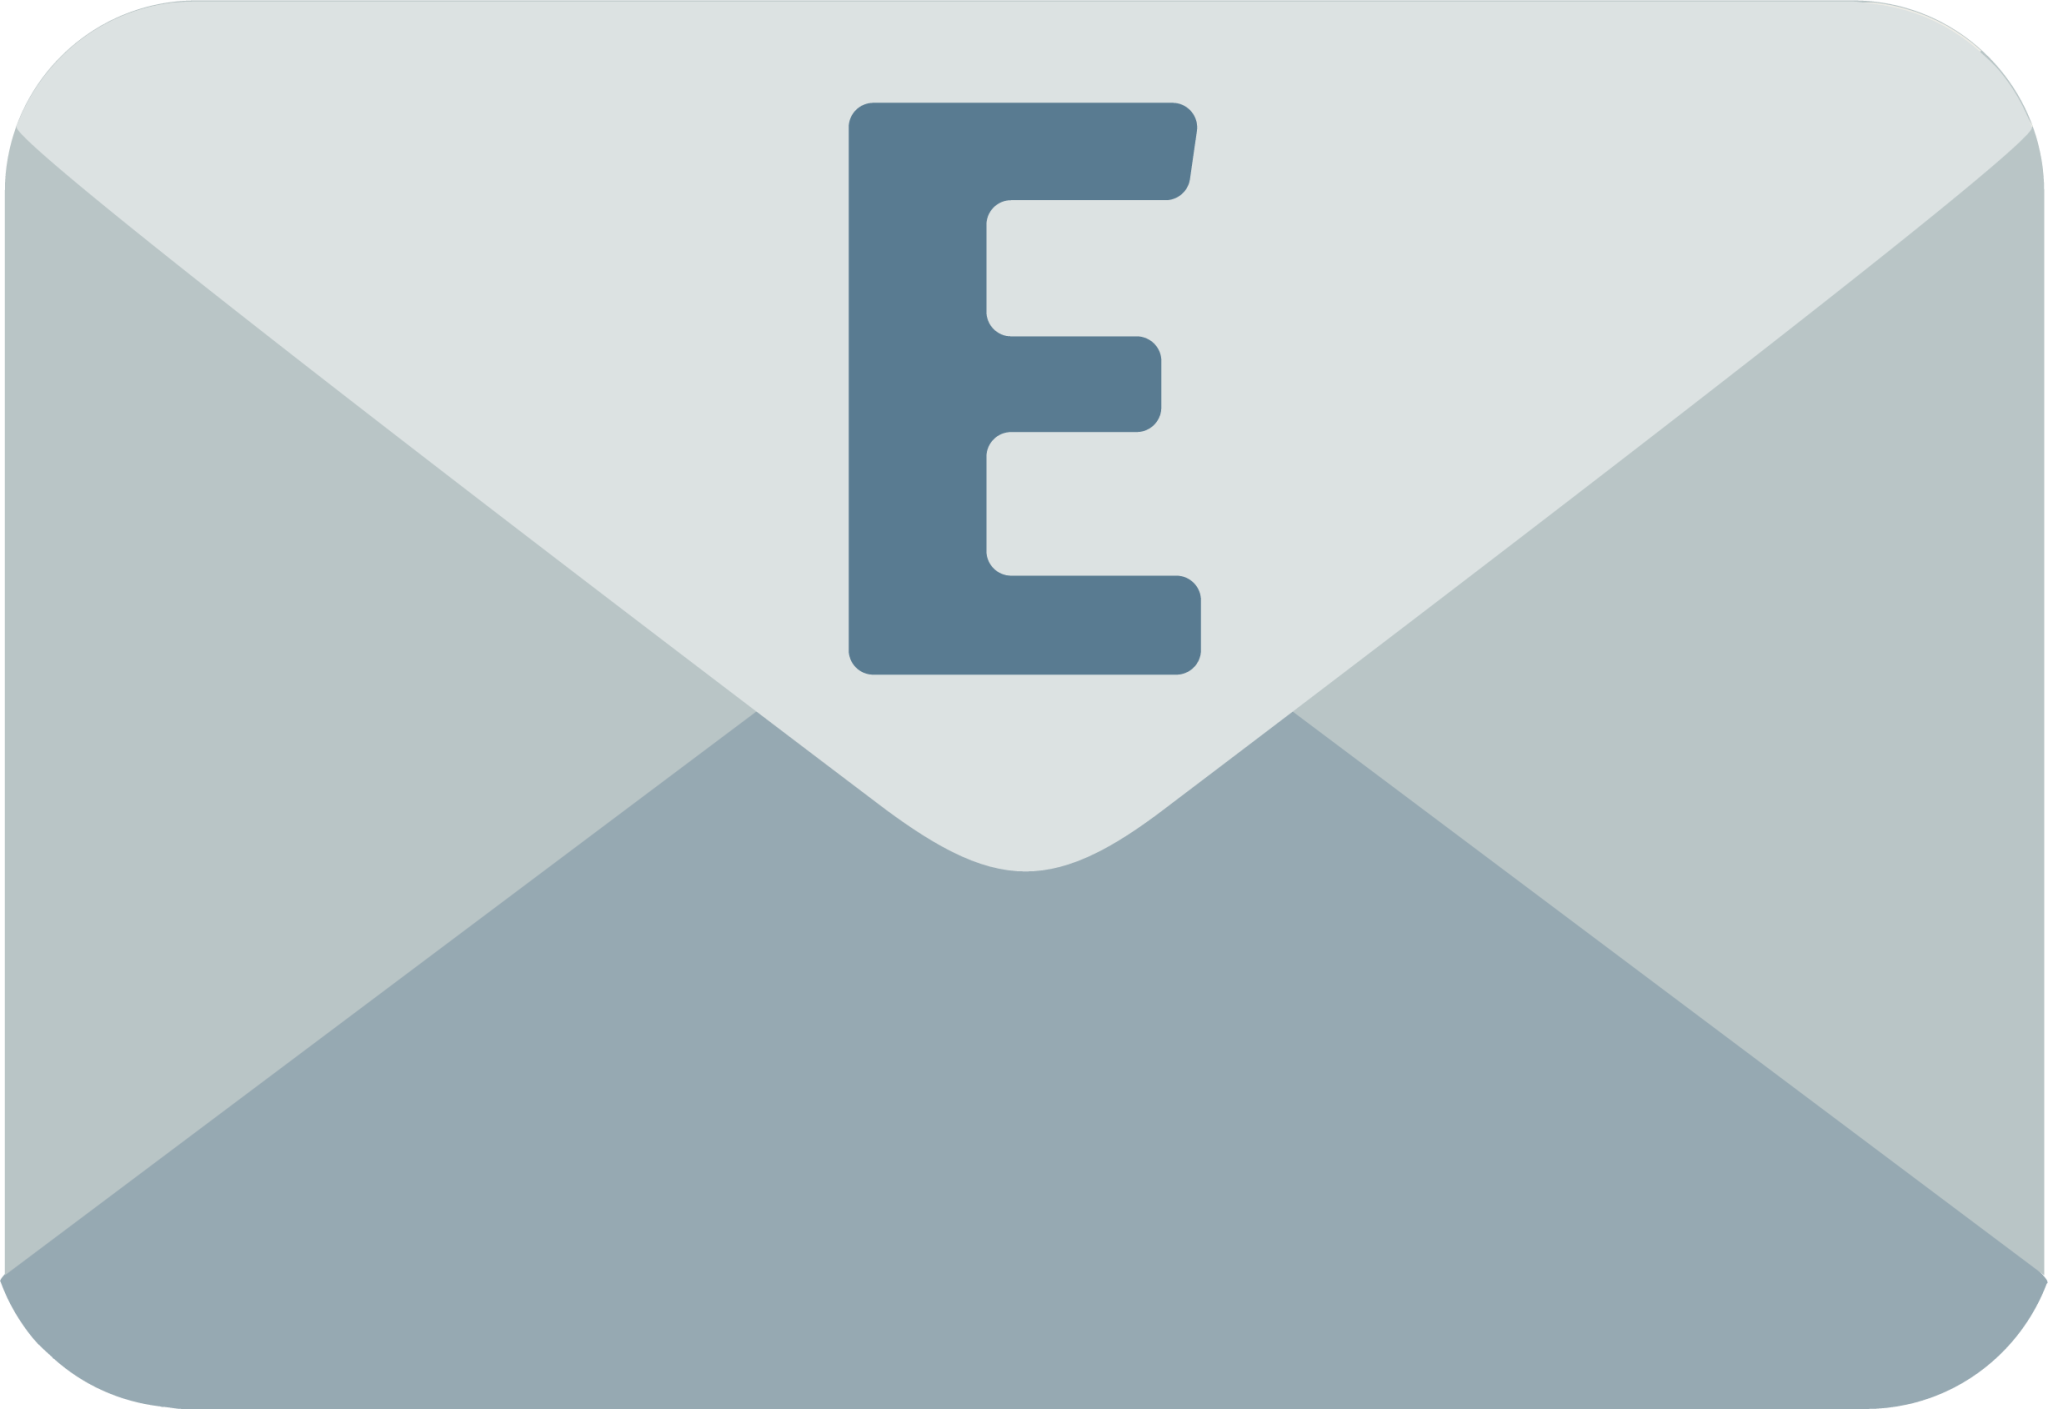 e-mail emoji